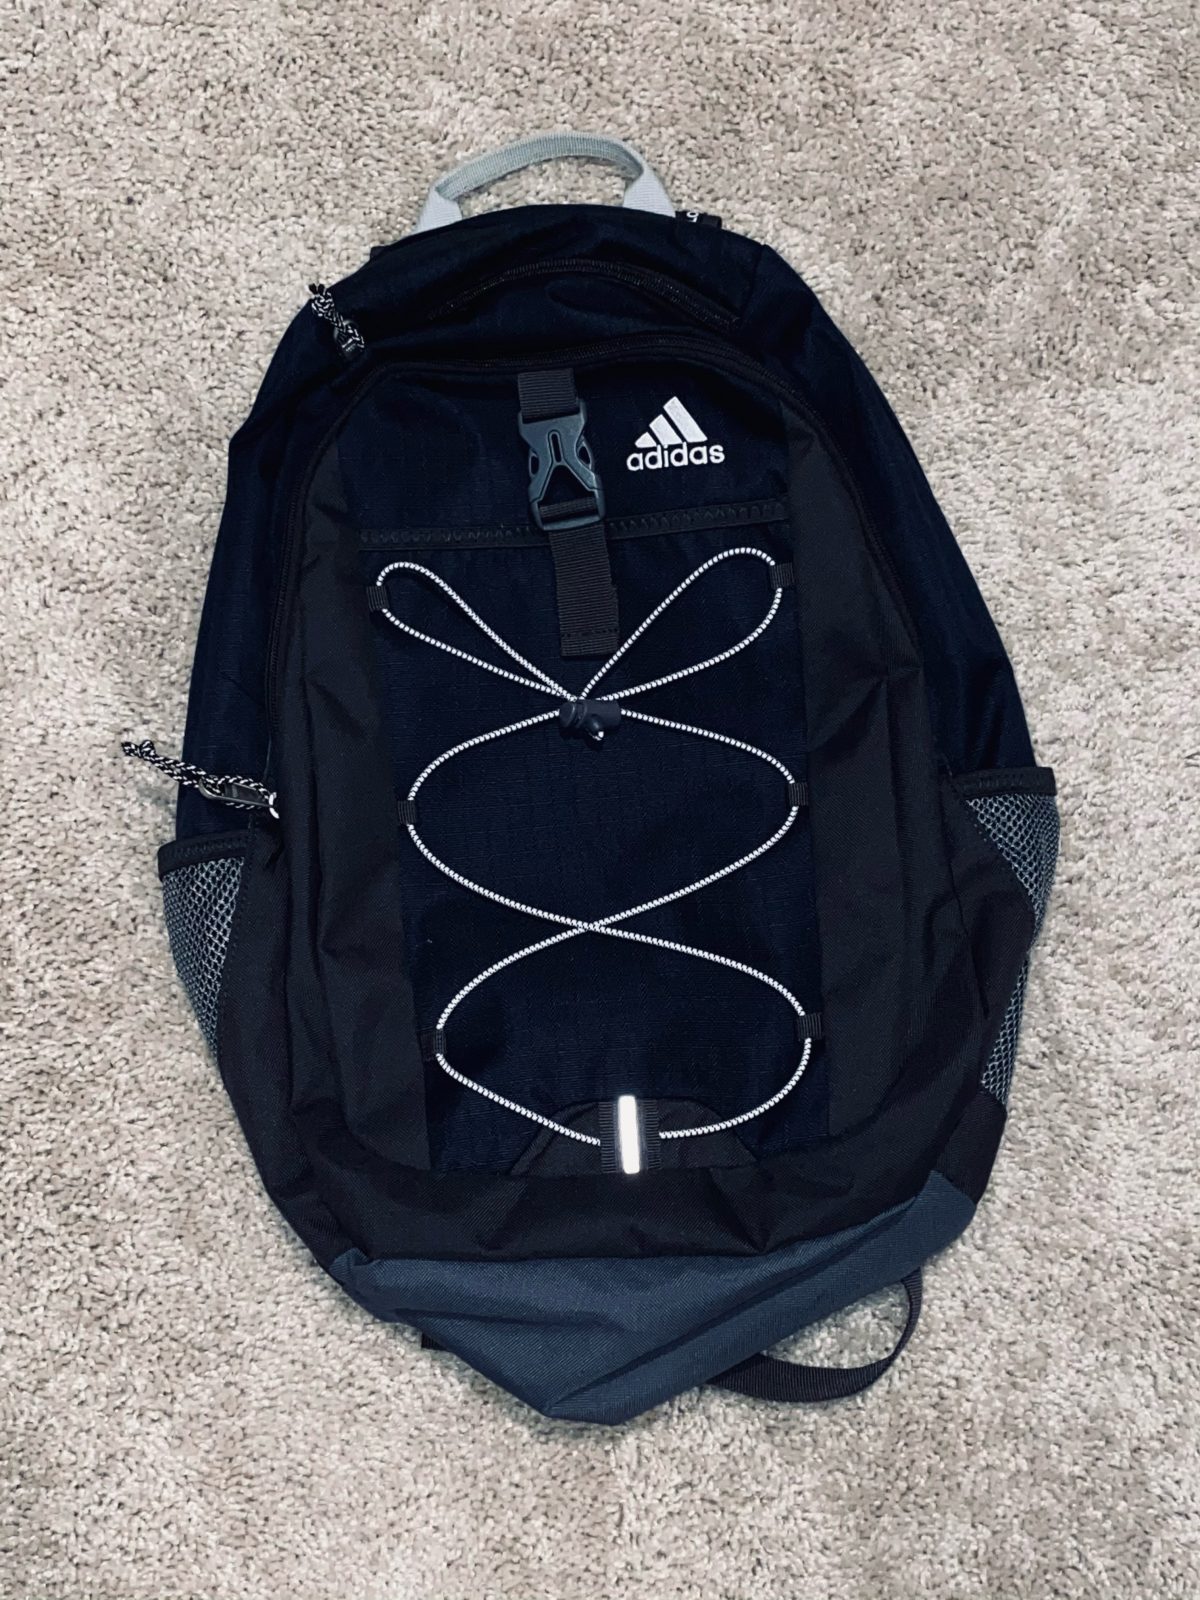 Adidas Backpack : NARP Clothing